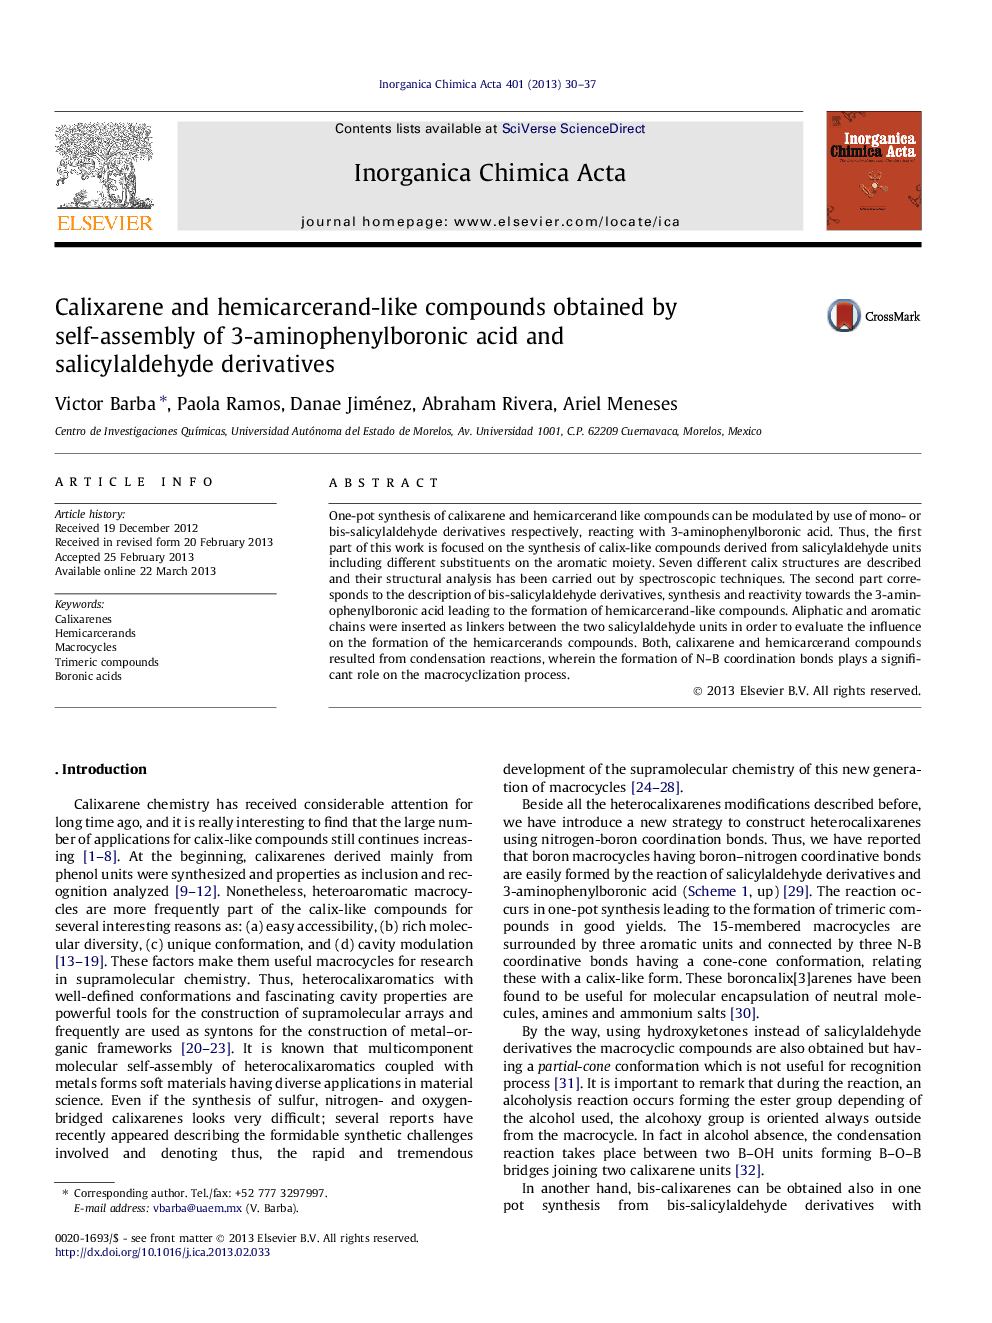 Calixarene and hemicarcerand-like compounds obtained by self-assembly of 3-aminophenylboronic acid and salicylaldehyde derivatives